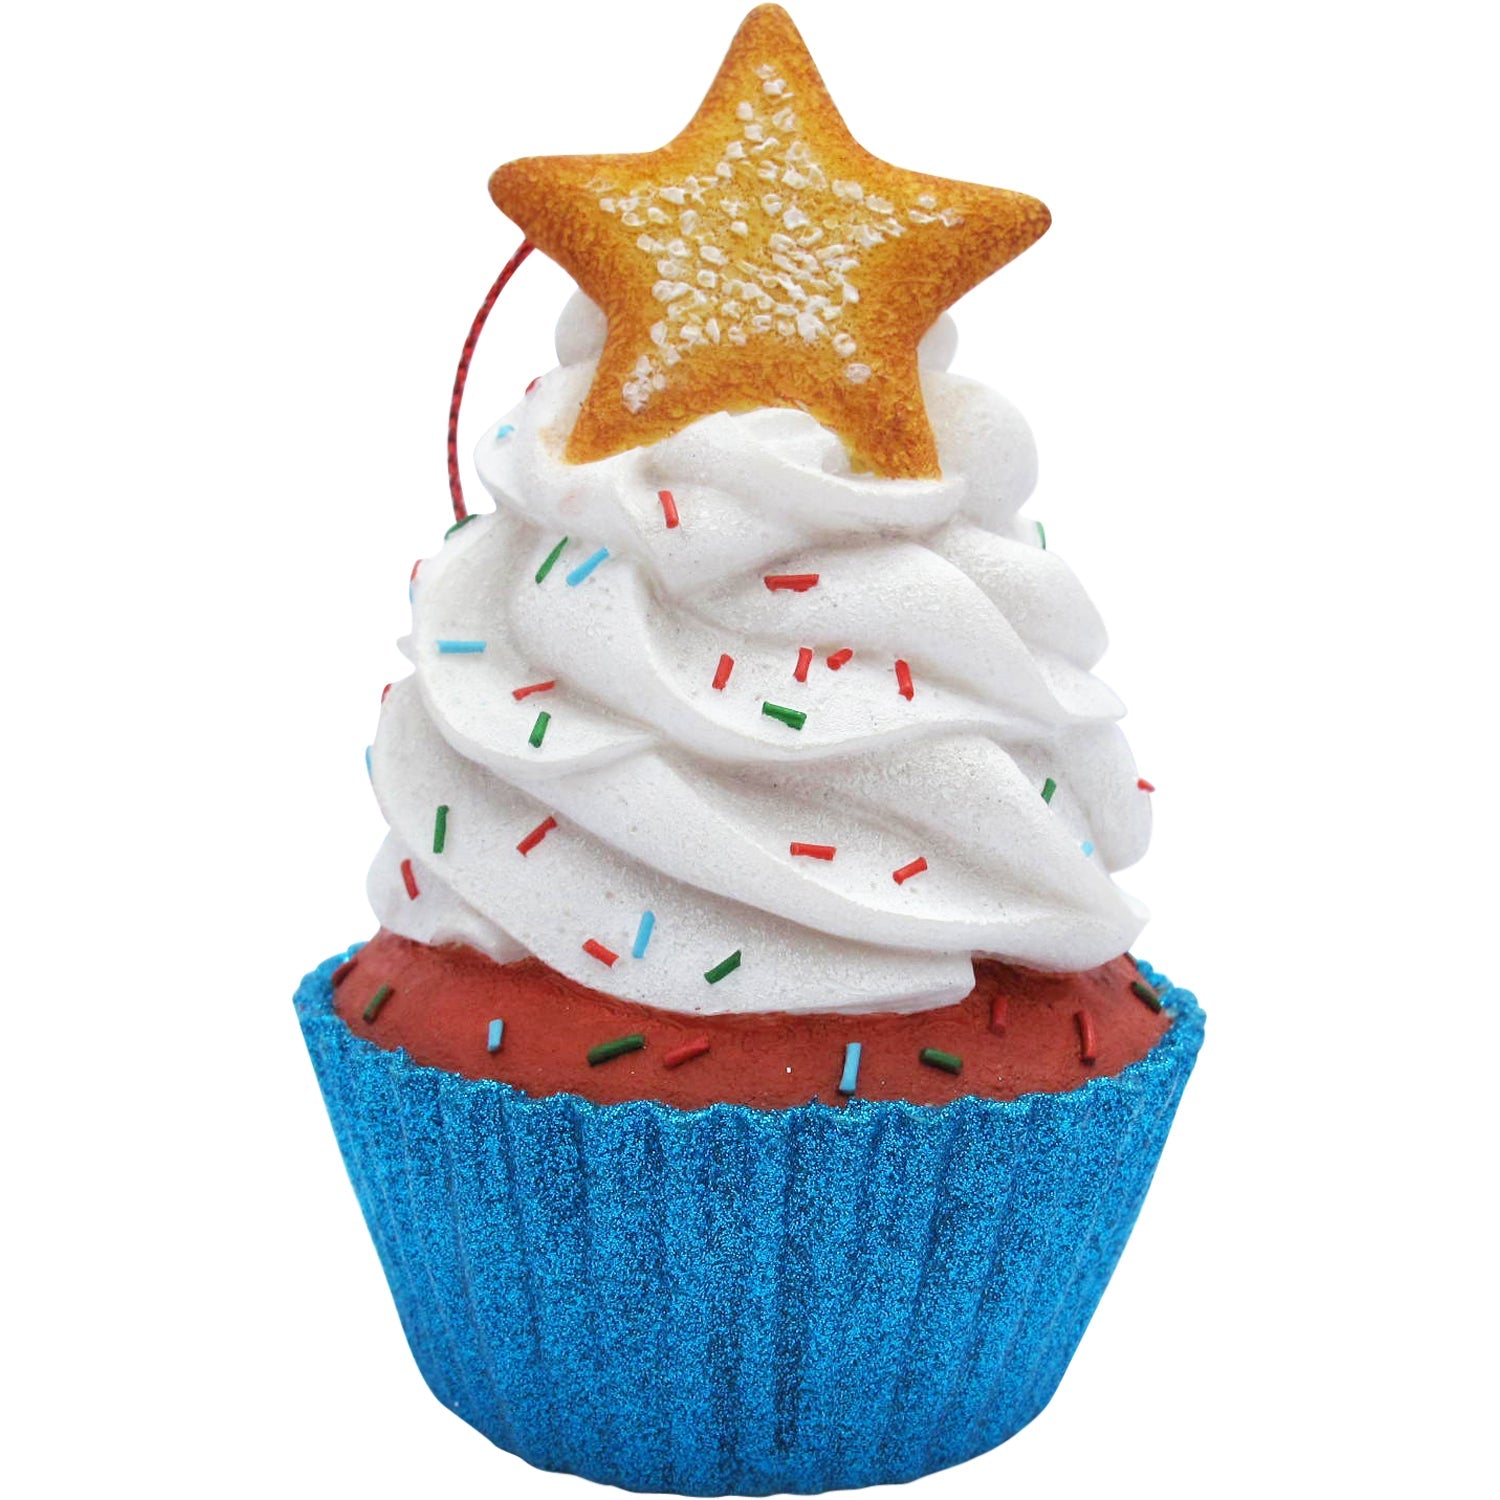 White Star Top Cupcake Christmas Tree Ornament